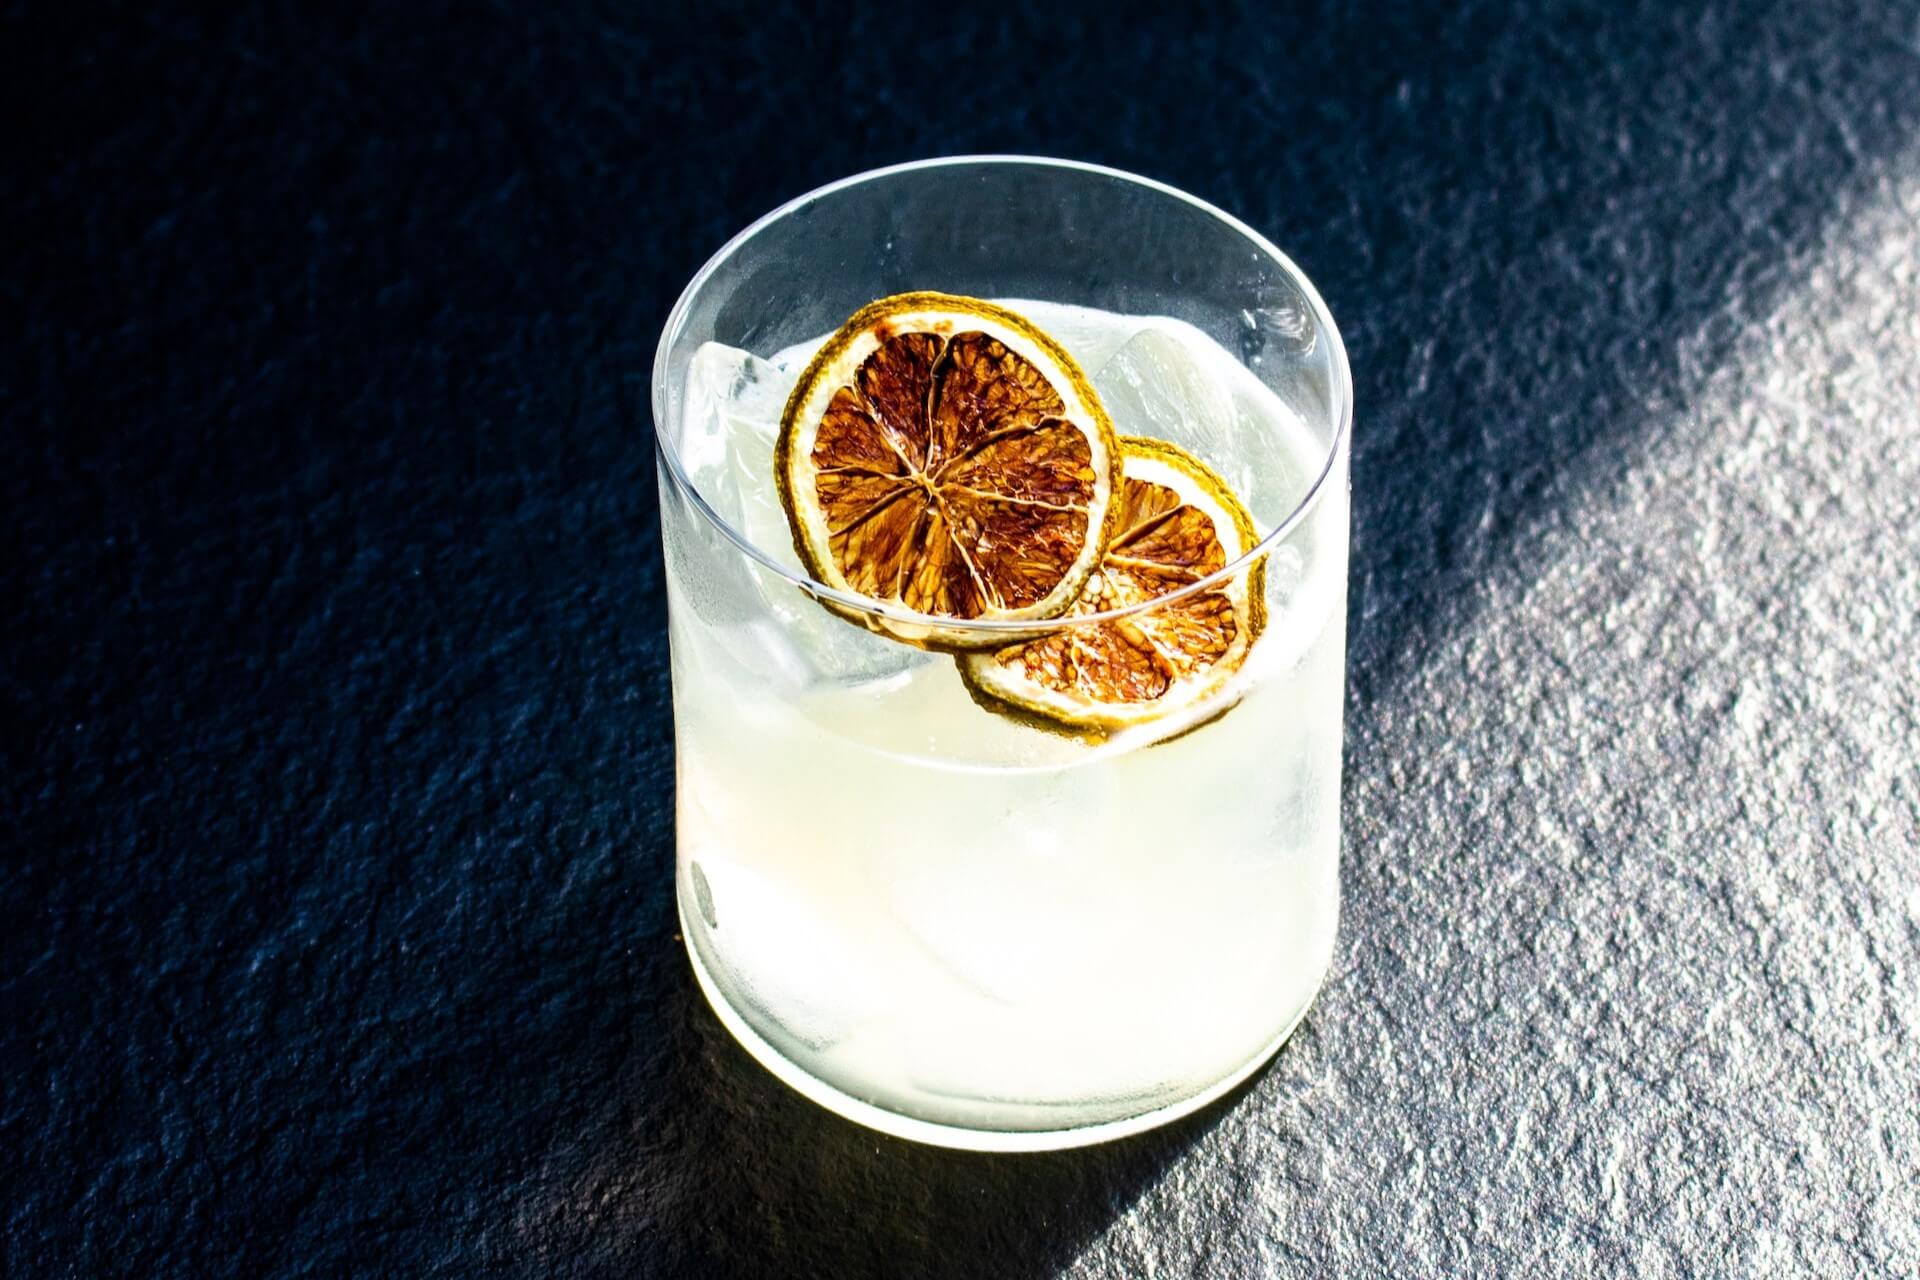 Margarita with dehydrated citrus garnish